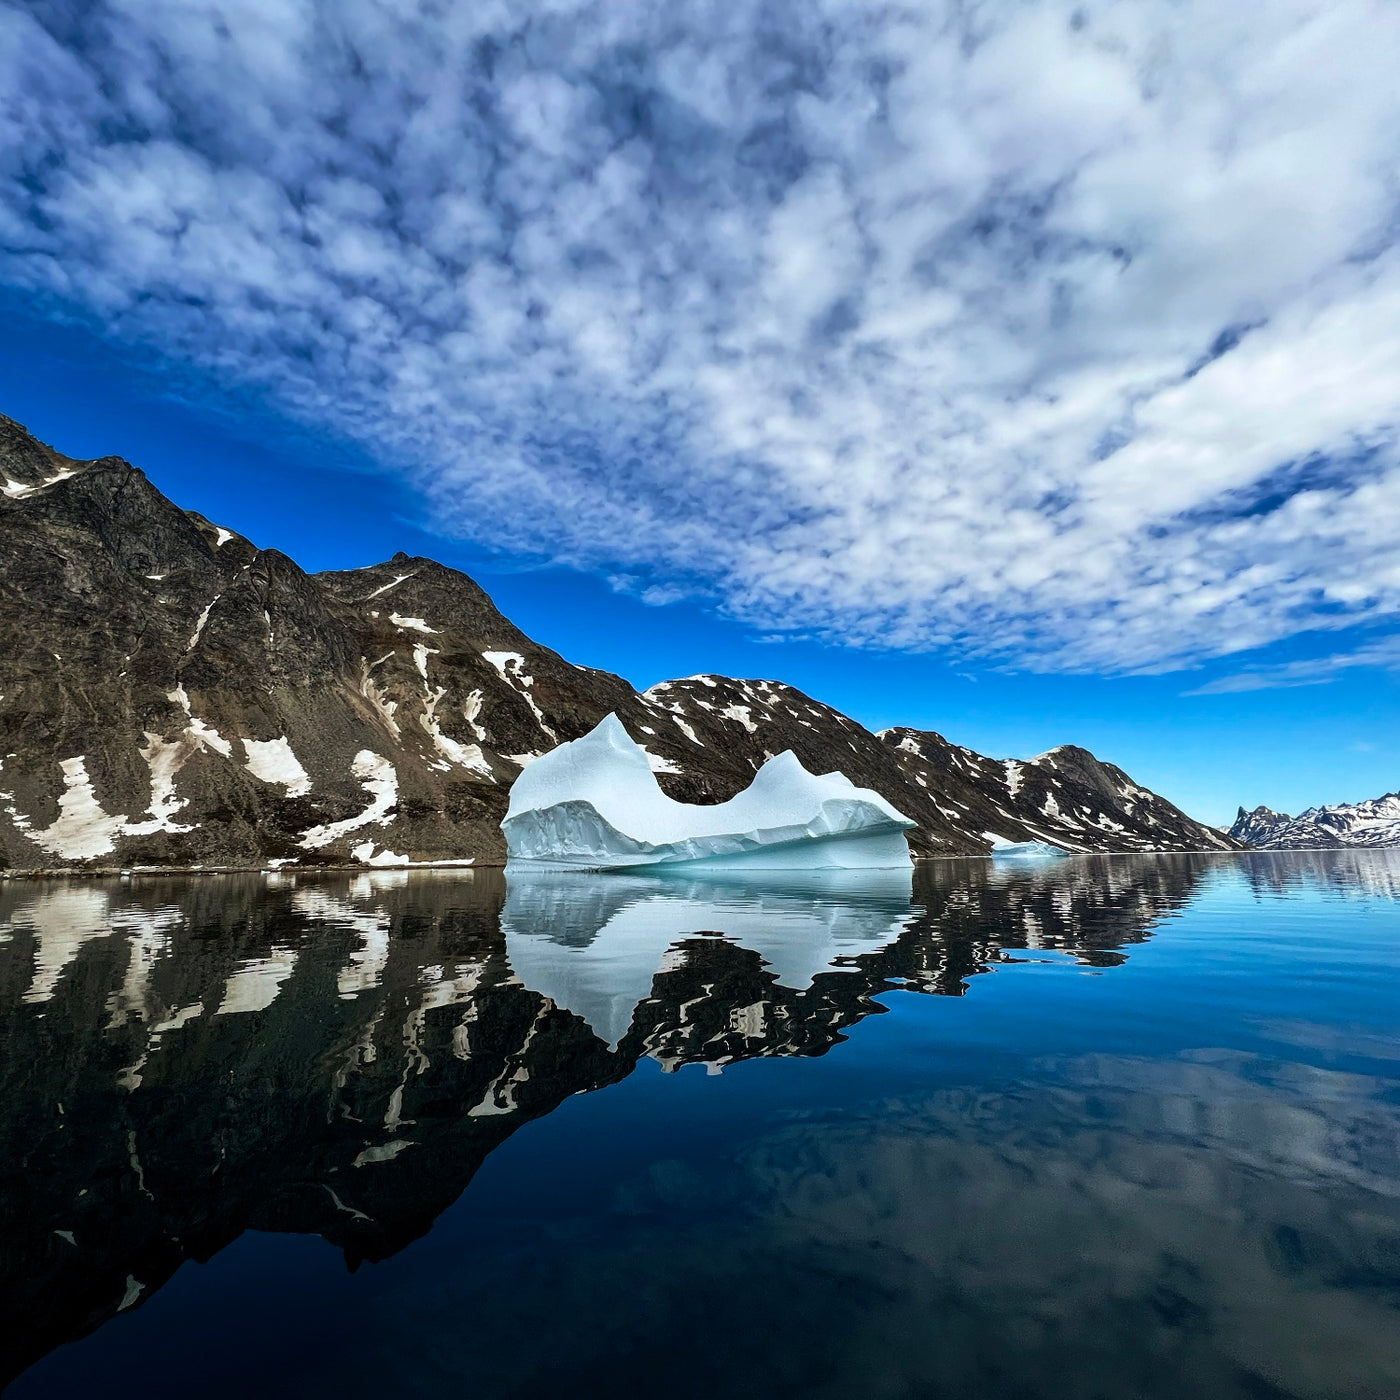 AMB56 Greenland: Underwater Icebergs